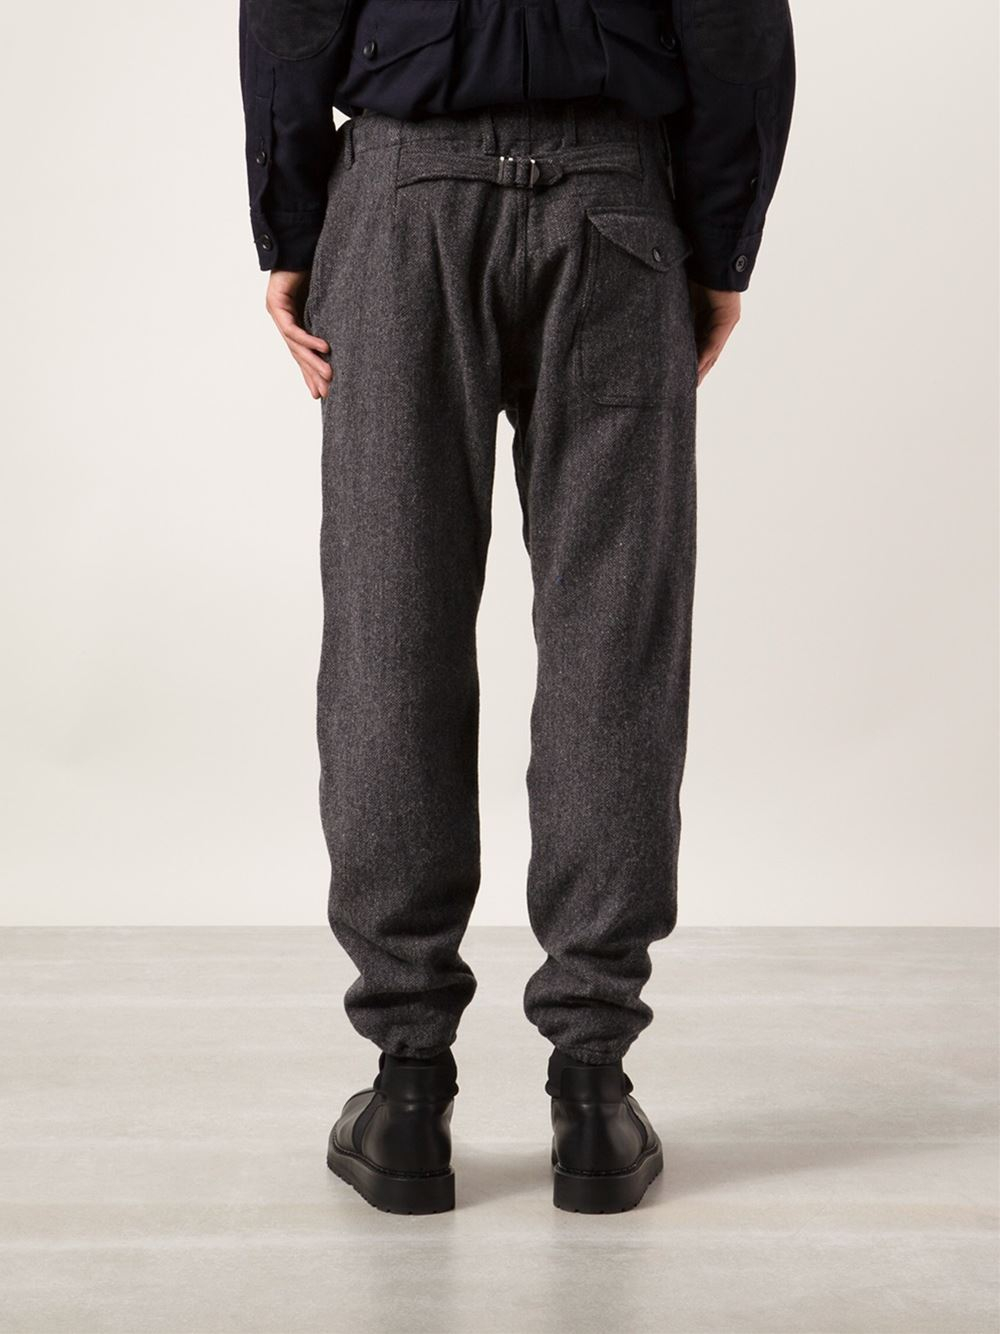 Lyst - Engineered Garments Herringbone Print Trousers in Gray for Men